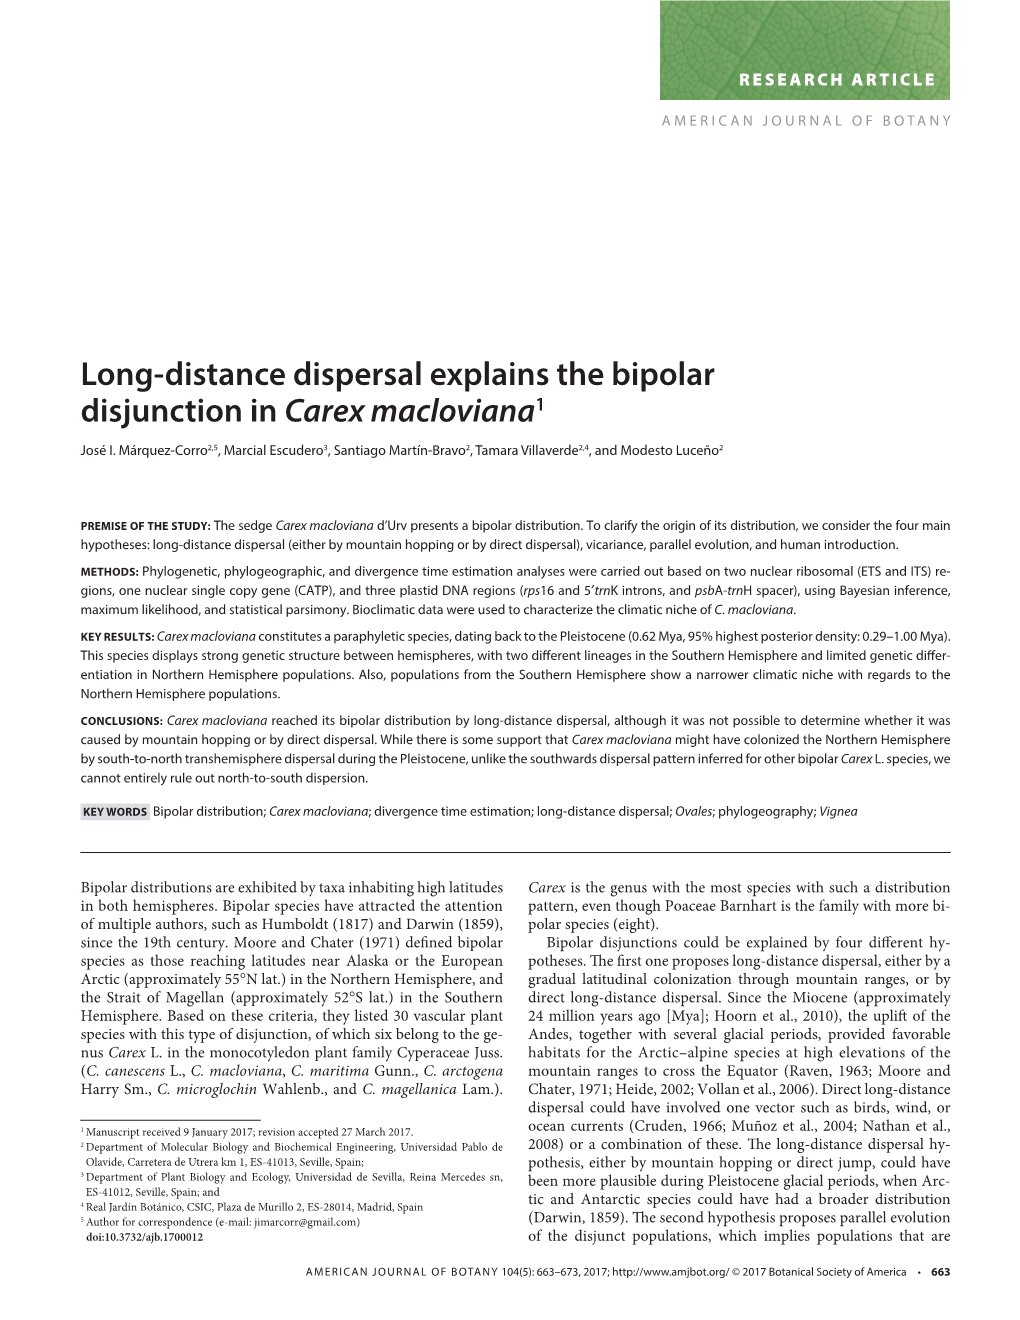 Distance Dispersal Explains the Bipolar Disjunction in &lt;I&gt;Carex Macloviana&lt;/I&gt;